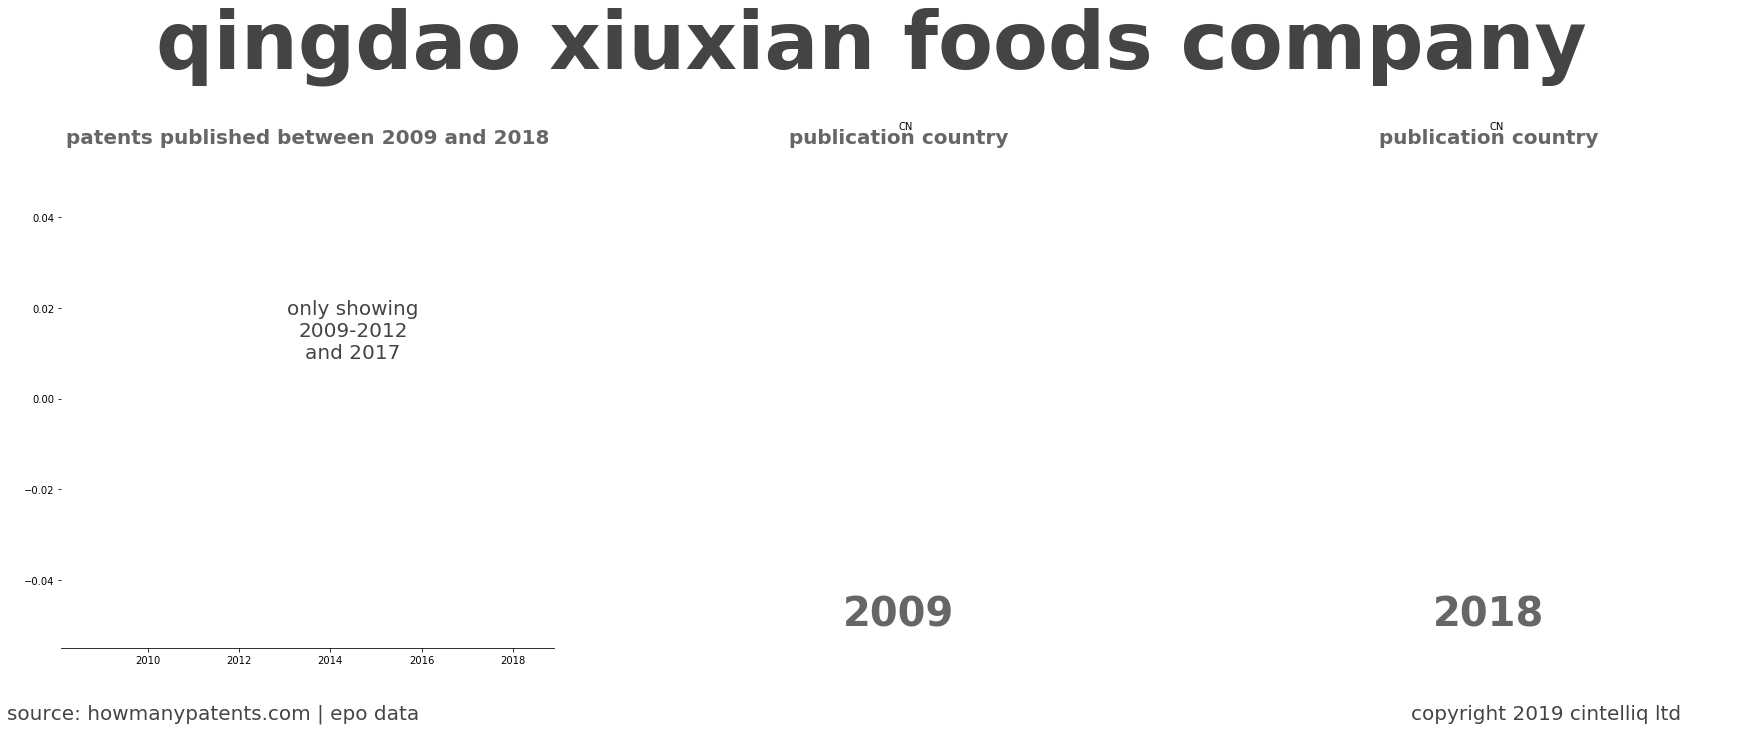 summary of patents for Qingdao Xiuxian Foods Company